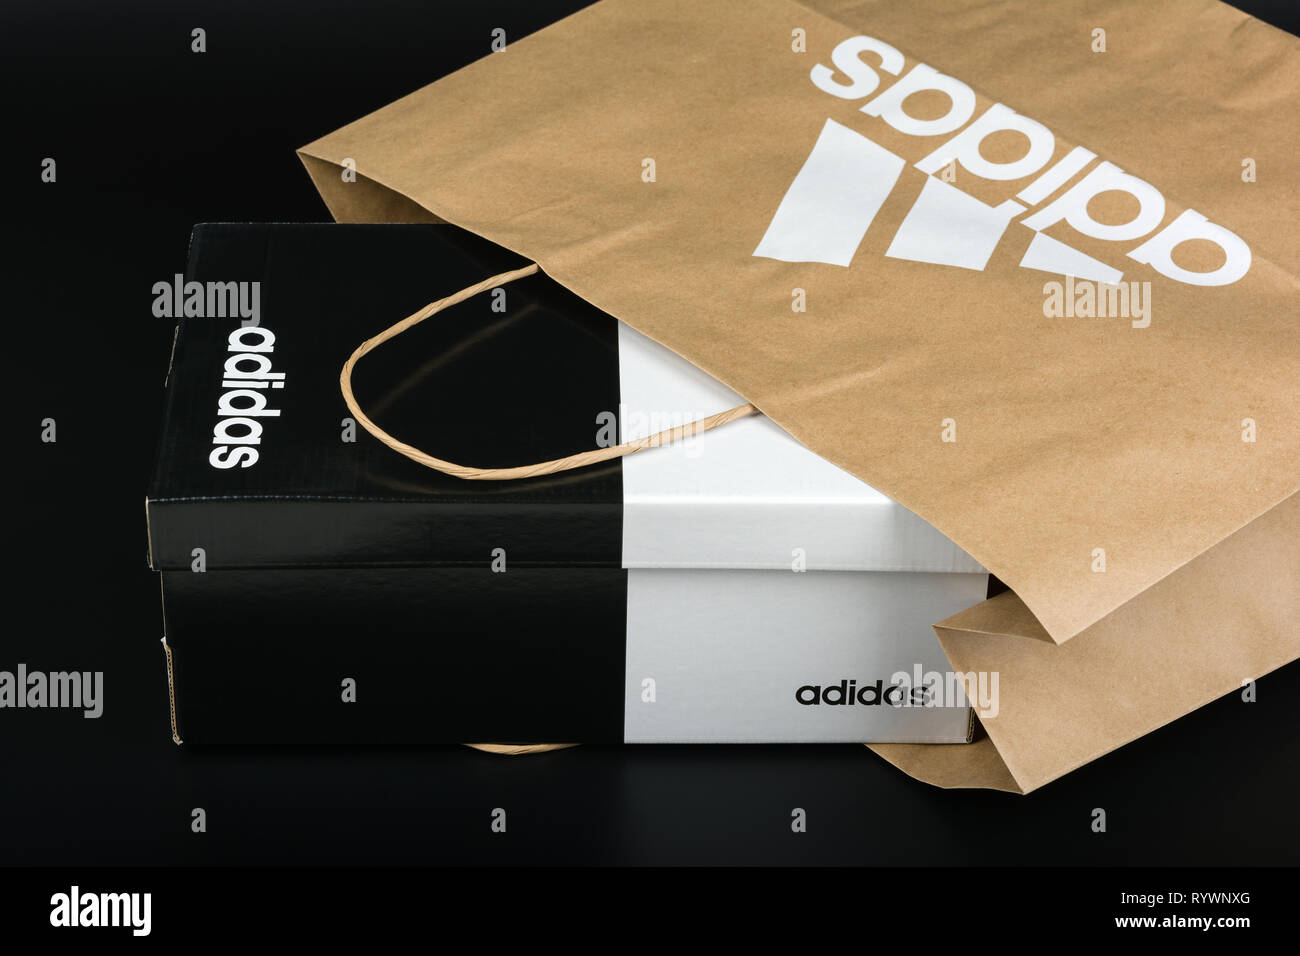 BURGAS, BULGARIA - MARCH 8, 2019: Paper bag with original Adidas logo and  Adidas shoes box on black background Stock Photo - Alamy